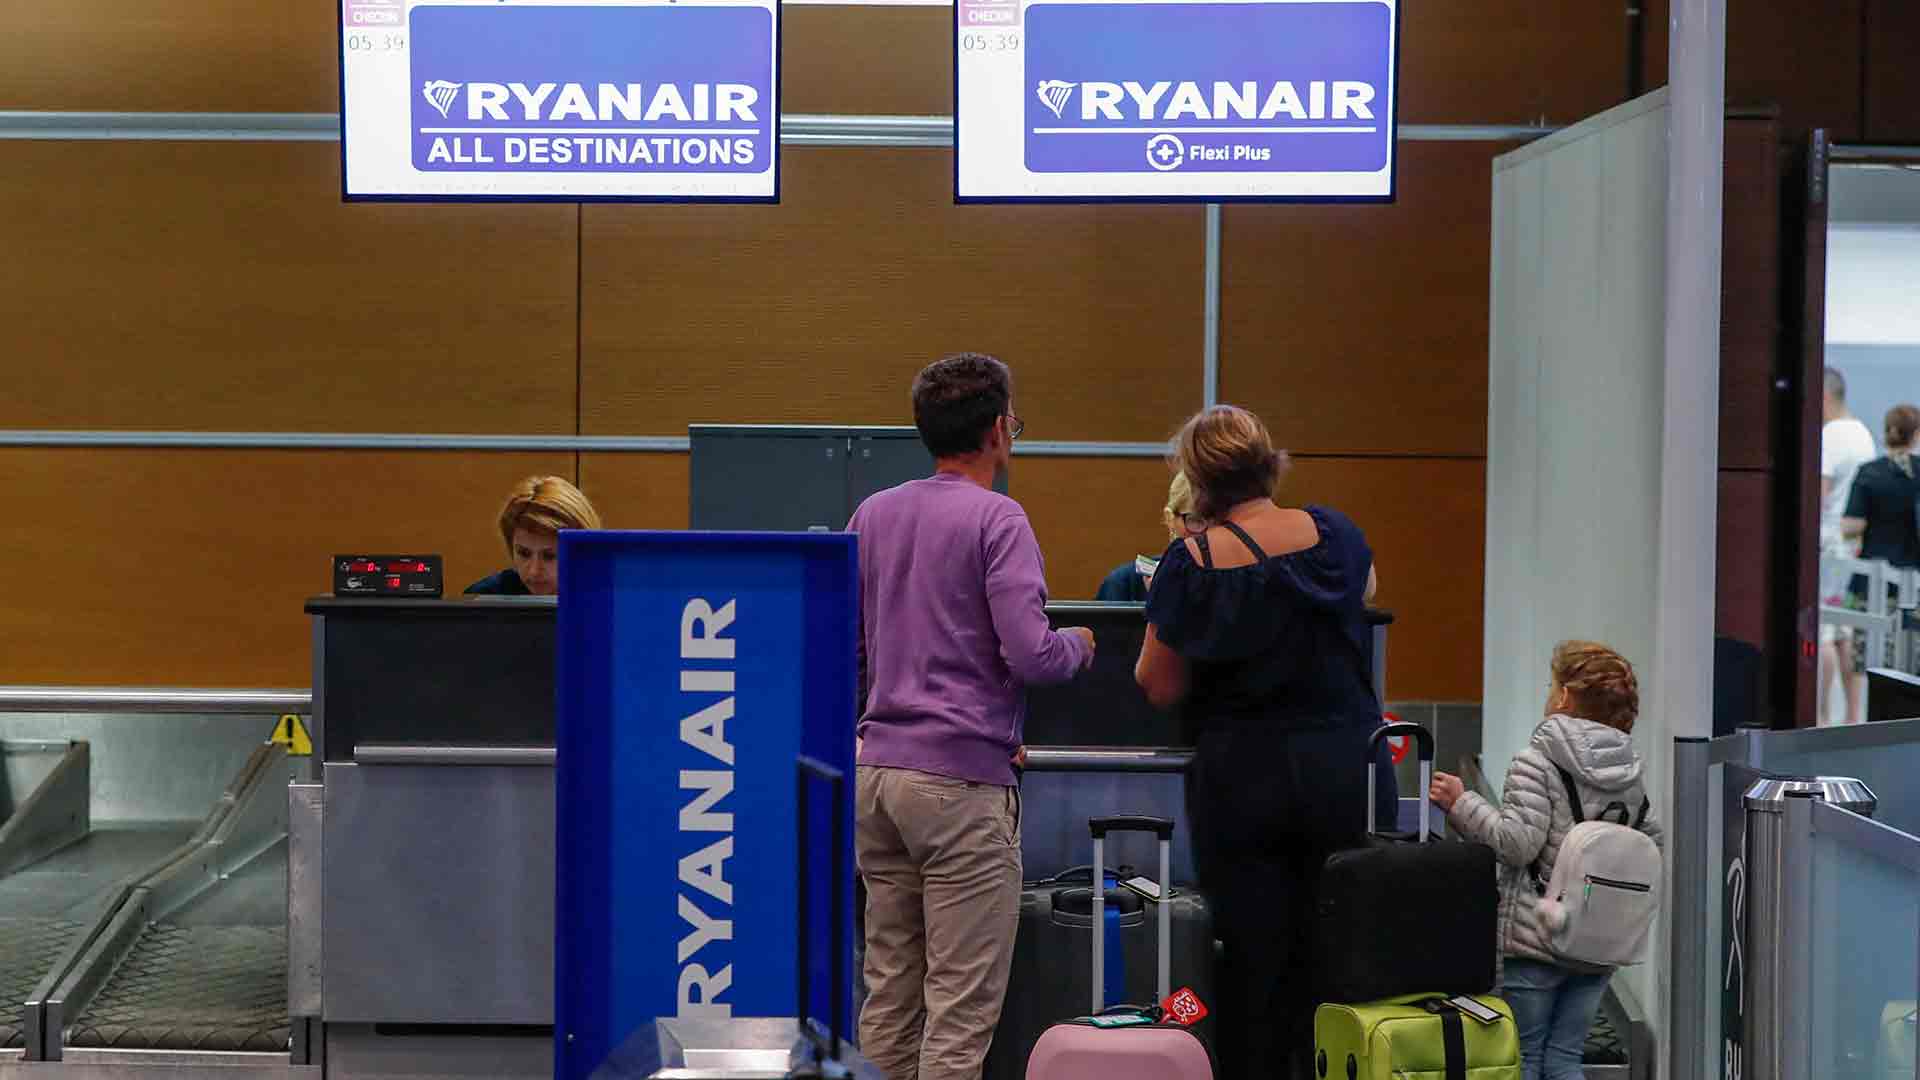 La huelga de pilotos de Ryanair afecta a 14.000 personas en España